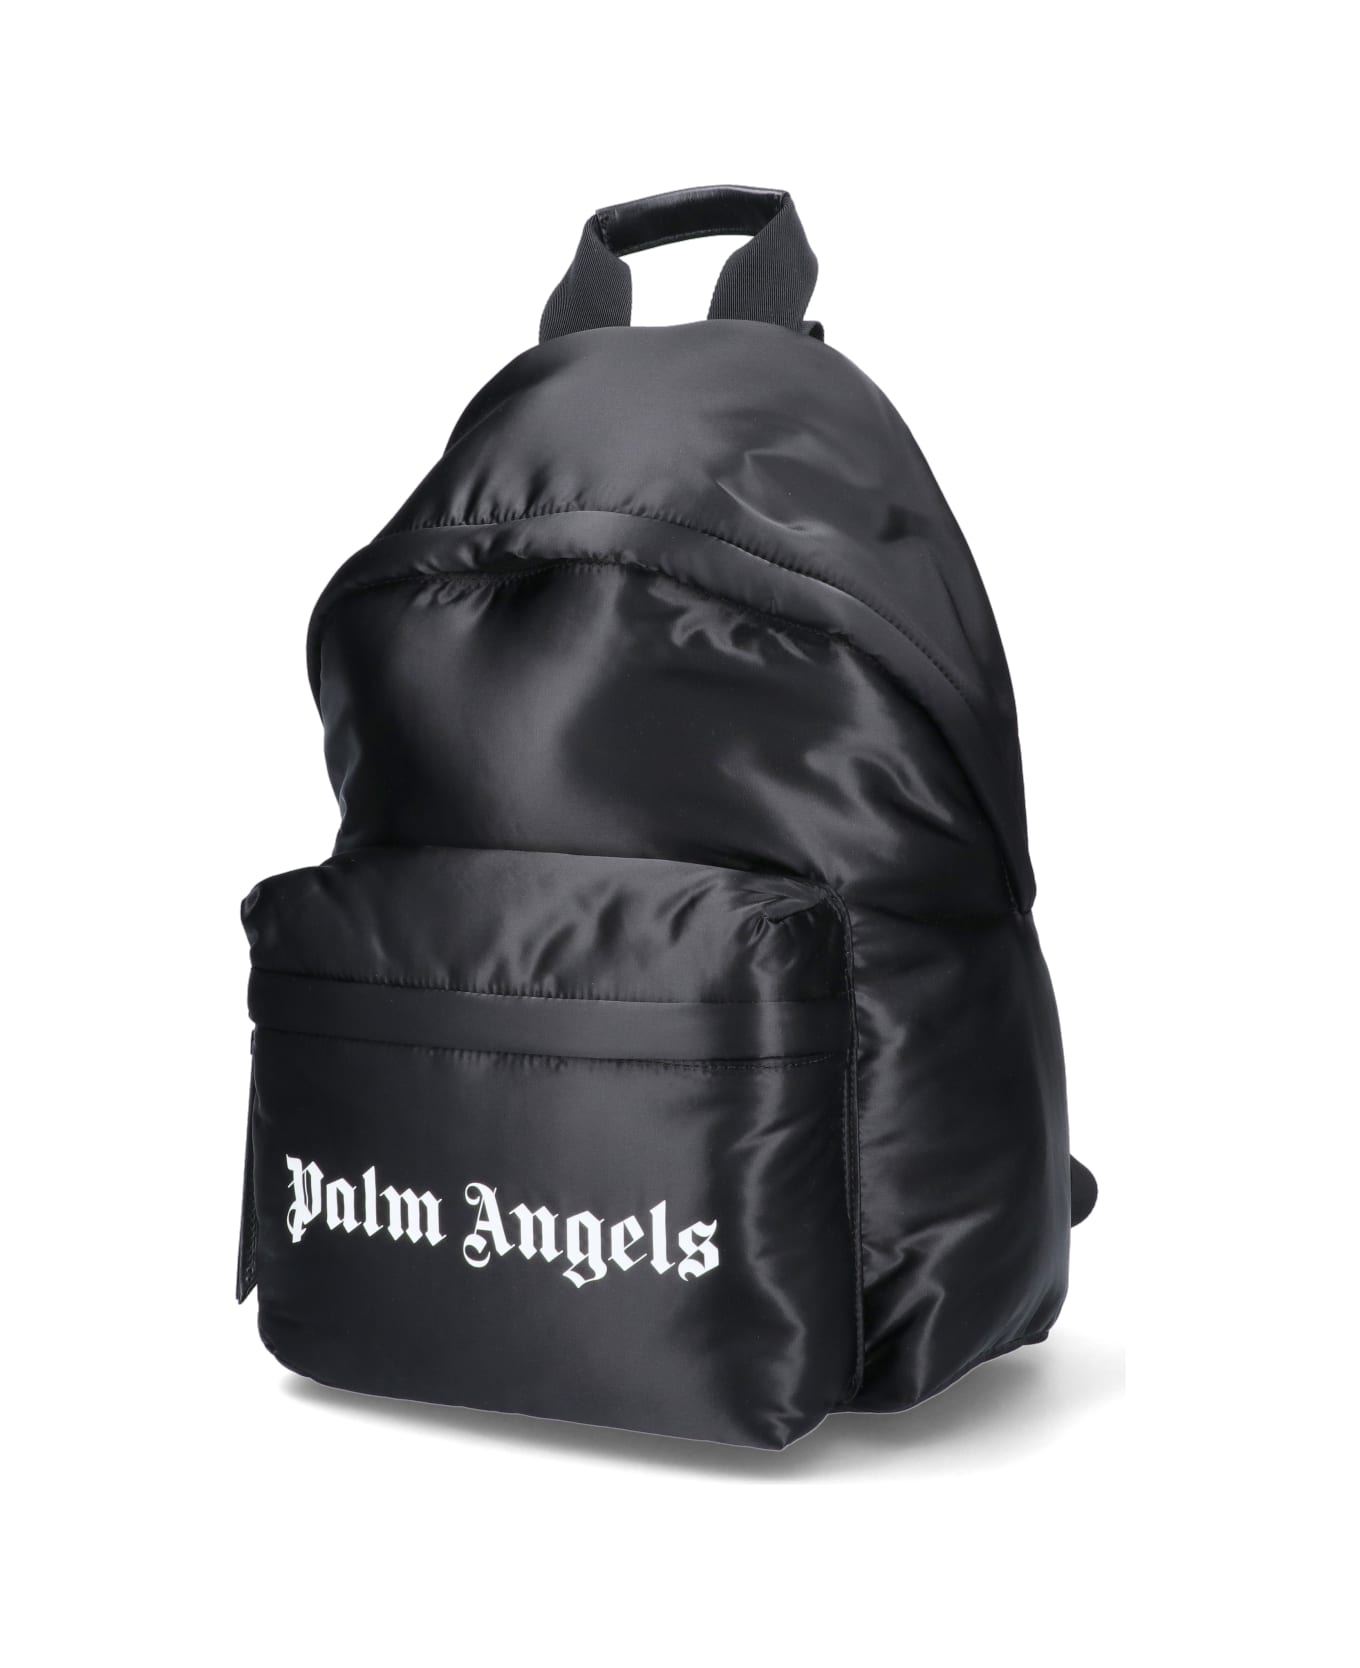 Palm Angels Backpack - Black